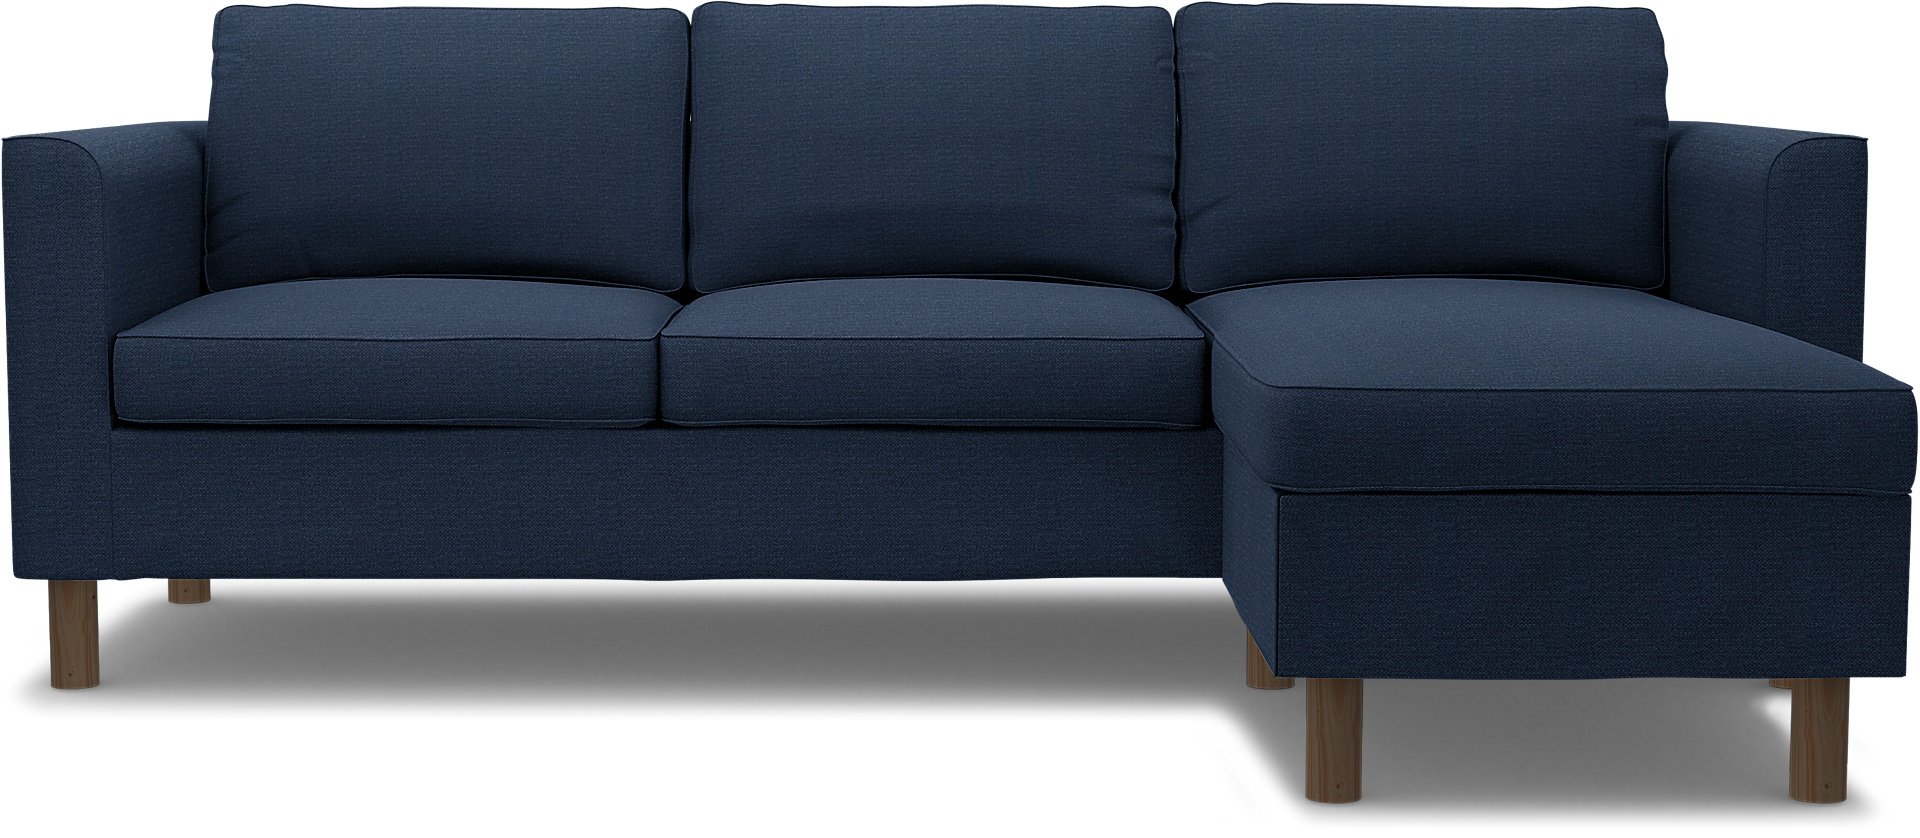 IKEA - Parup 3 Seater with chaise longue, Navy Blue, Linen - Bemz